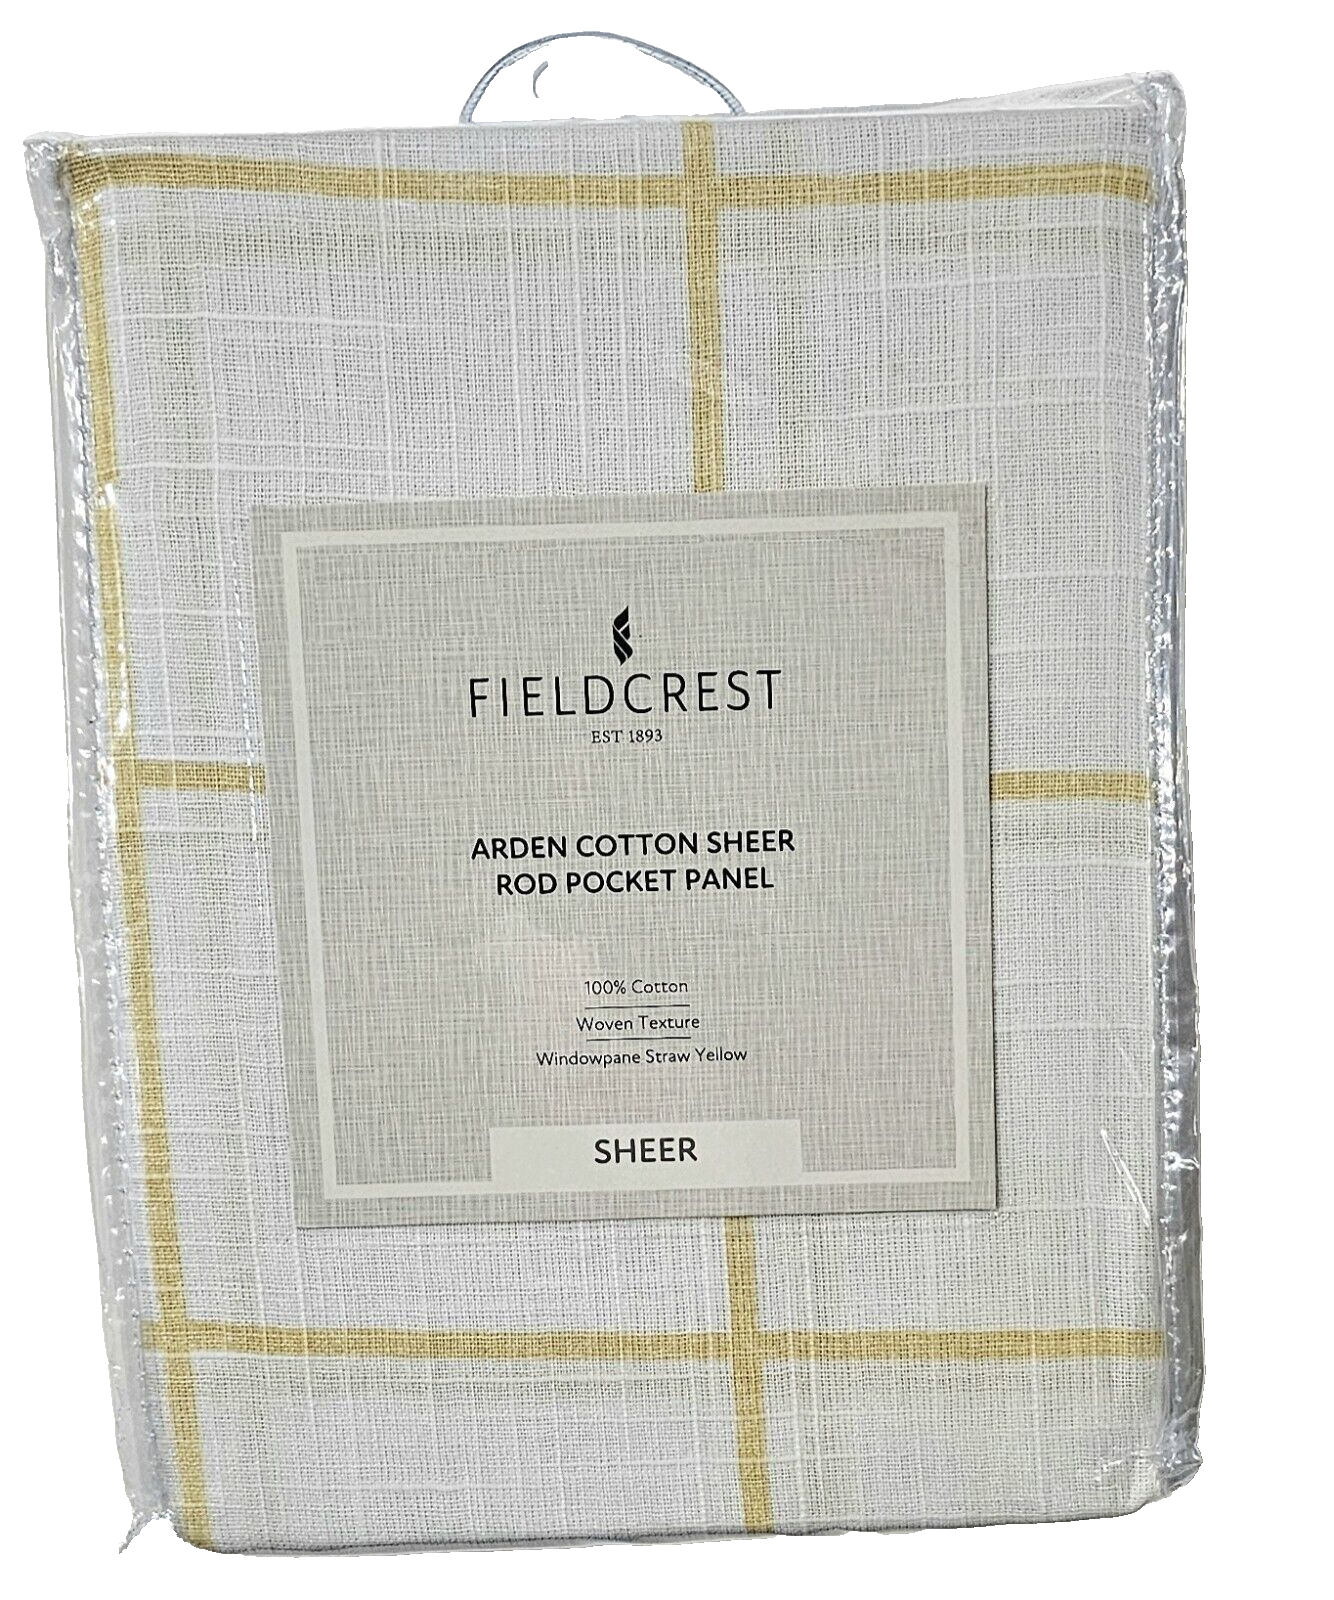 Fieldcrest Arden Cotton Sheer Rod Pocket Panel Cotton Windowpane Straw Yellow - $23.99